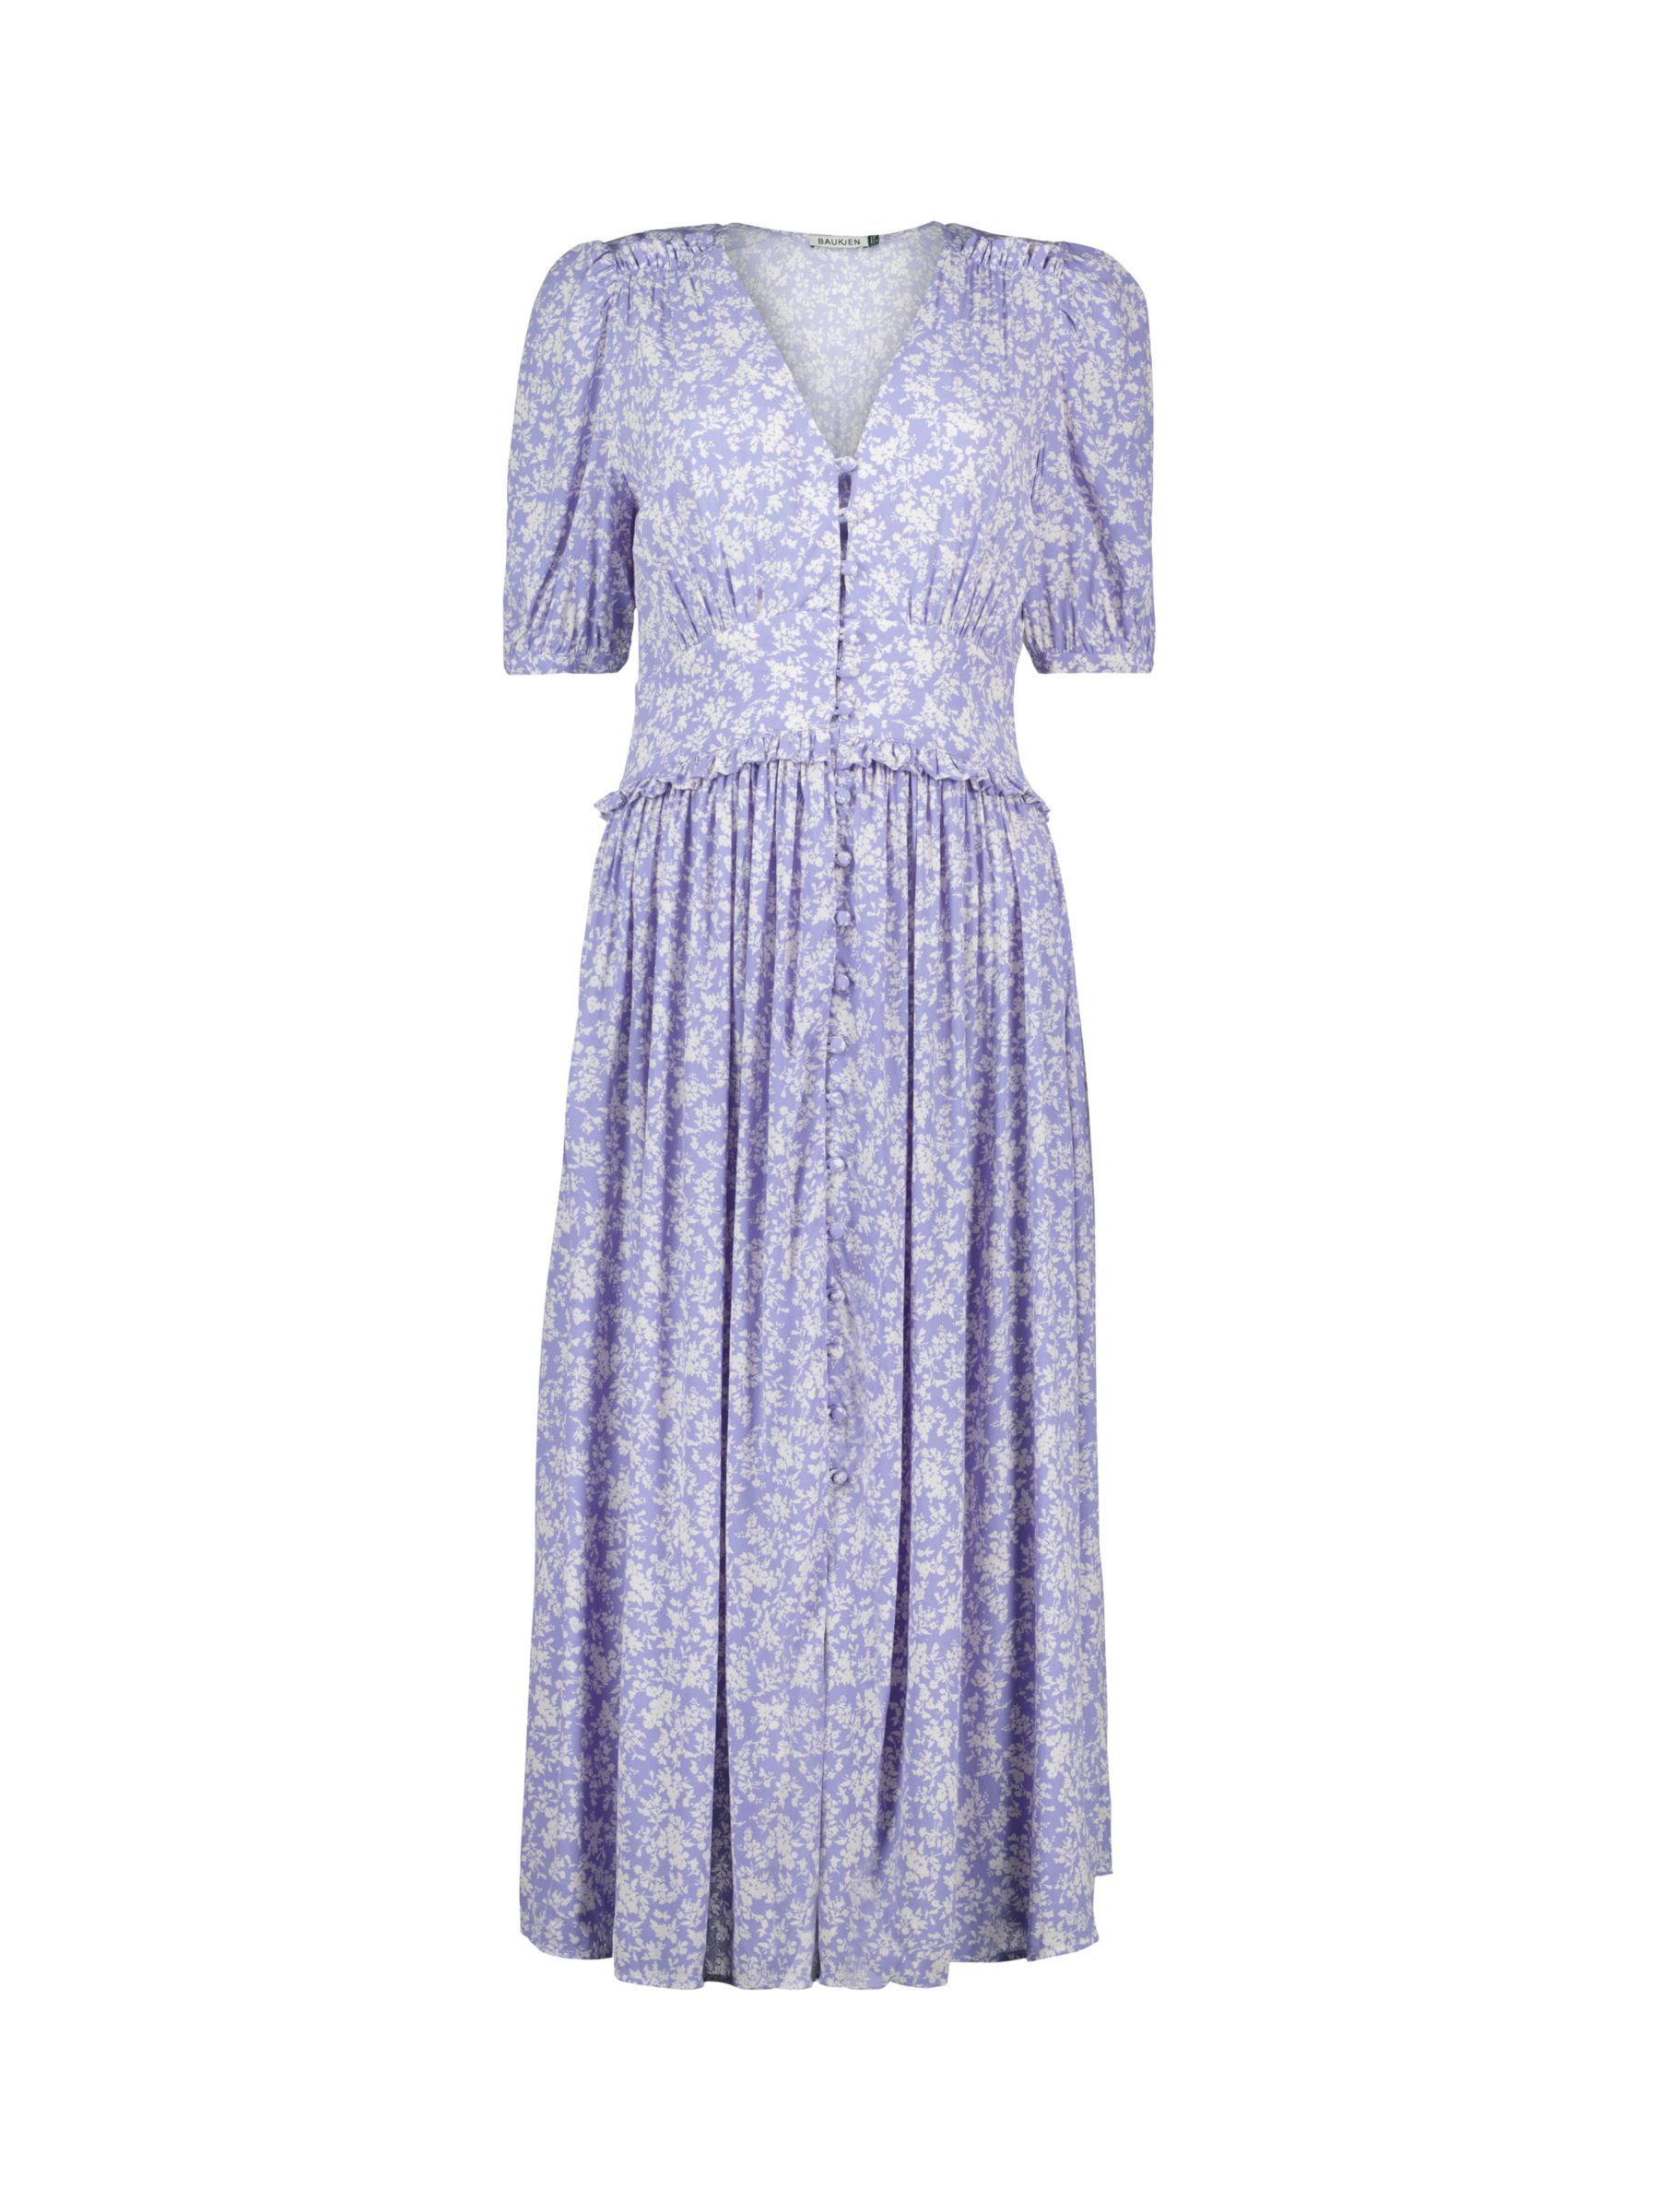 Baukjen Suzy Curved Waist Floral Midi Dress, Pale Lavender, 10